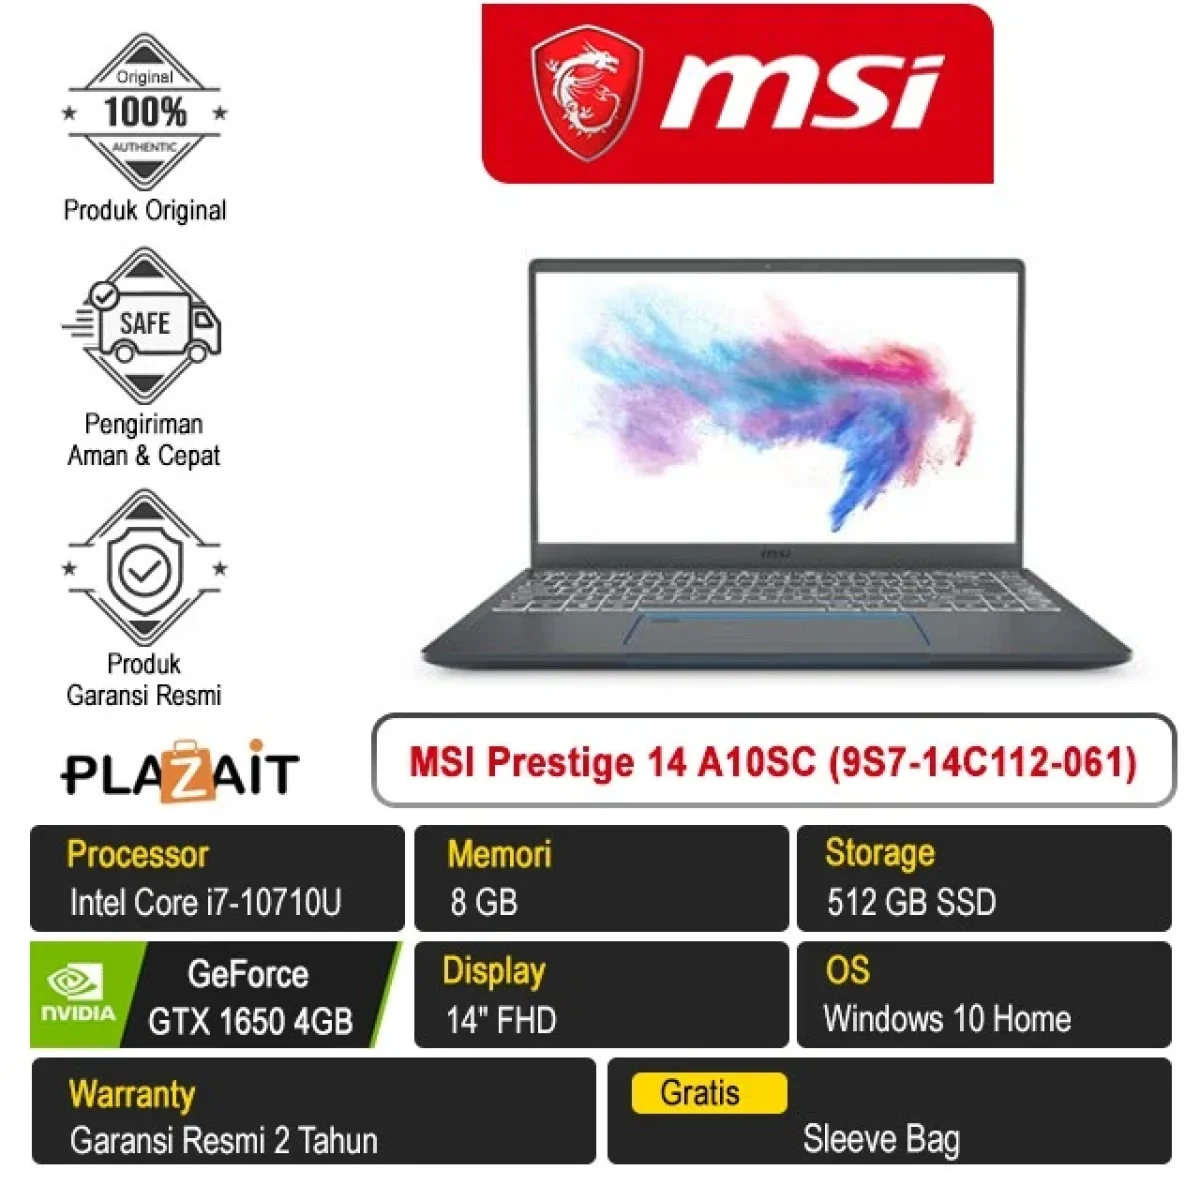 MSI Prestige 14 A10SC (9S7-14C112-061) /Intel Core i7-10710U